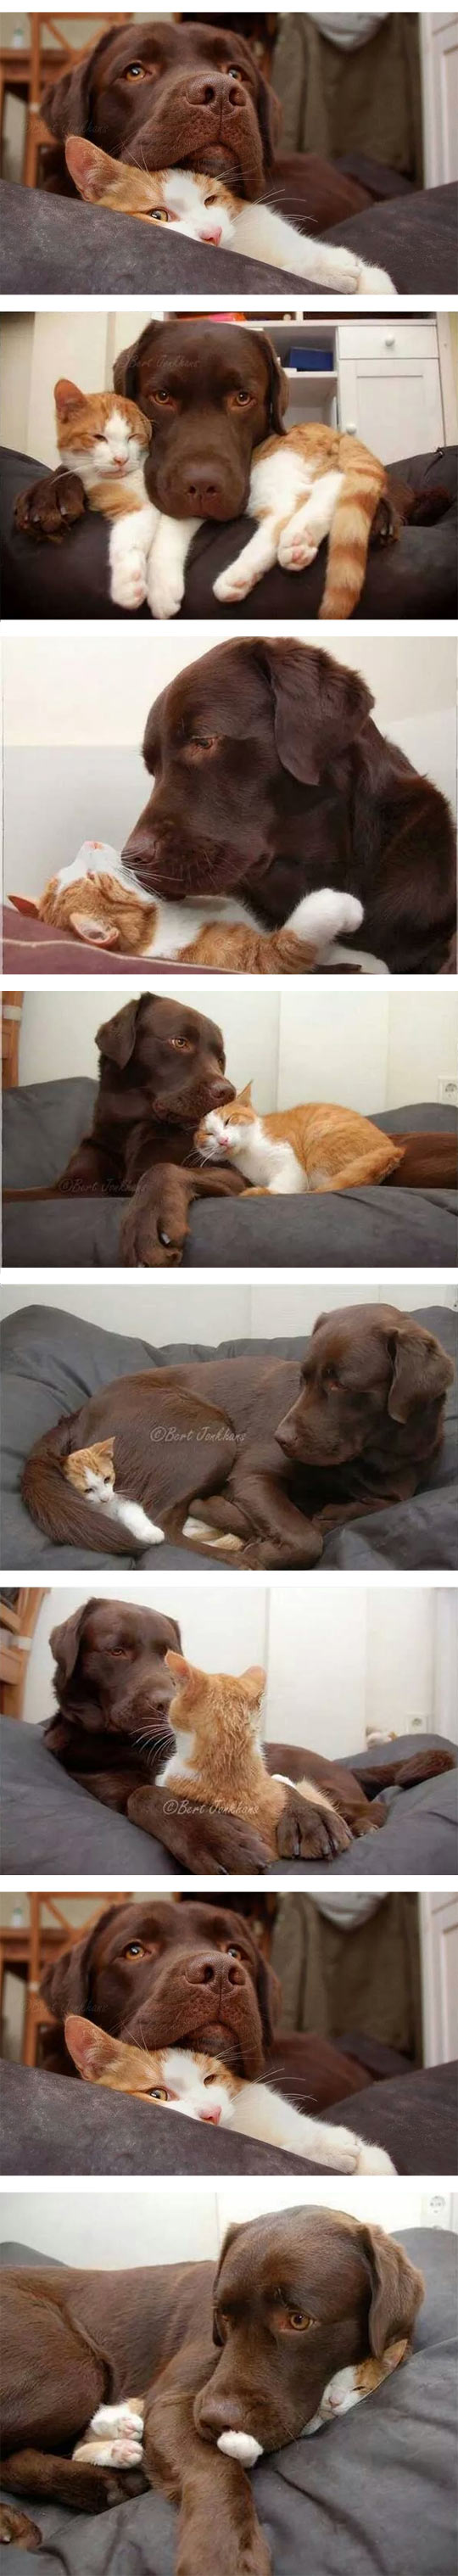 funny-dog-cat-love-hug-sleeping-cuddle